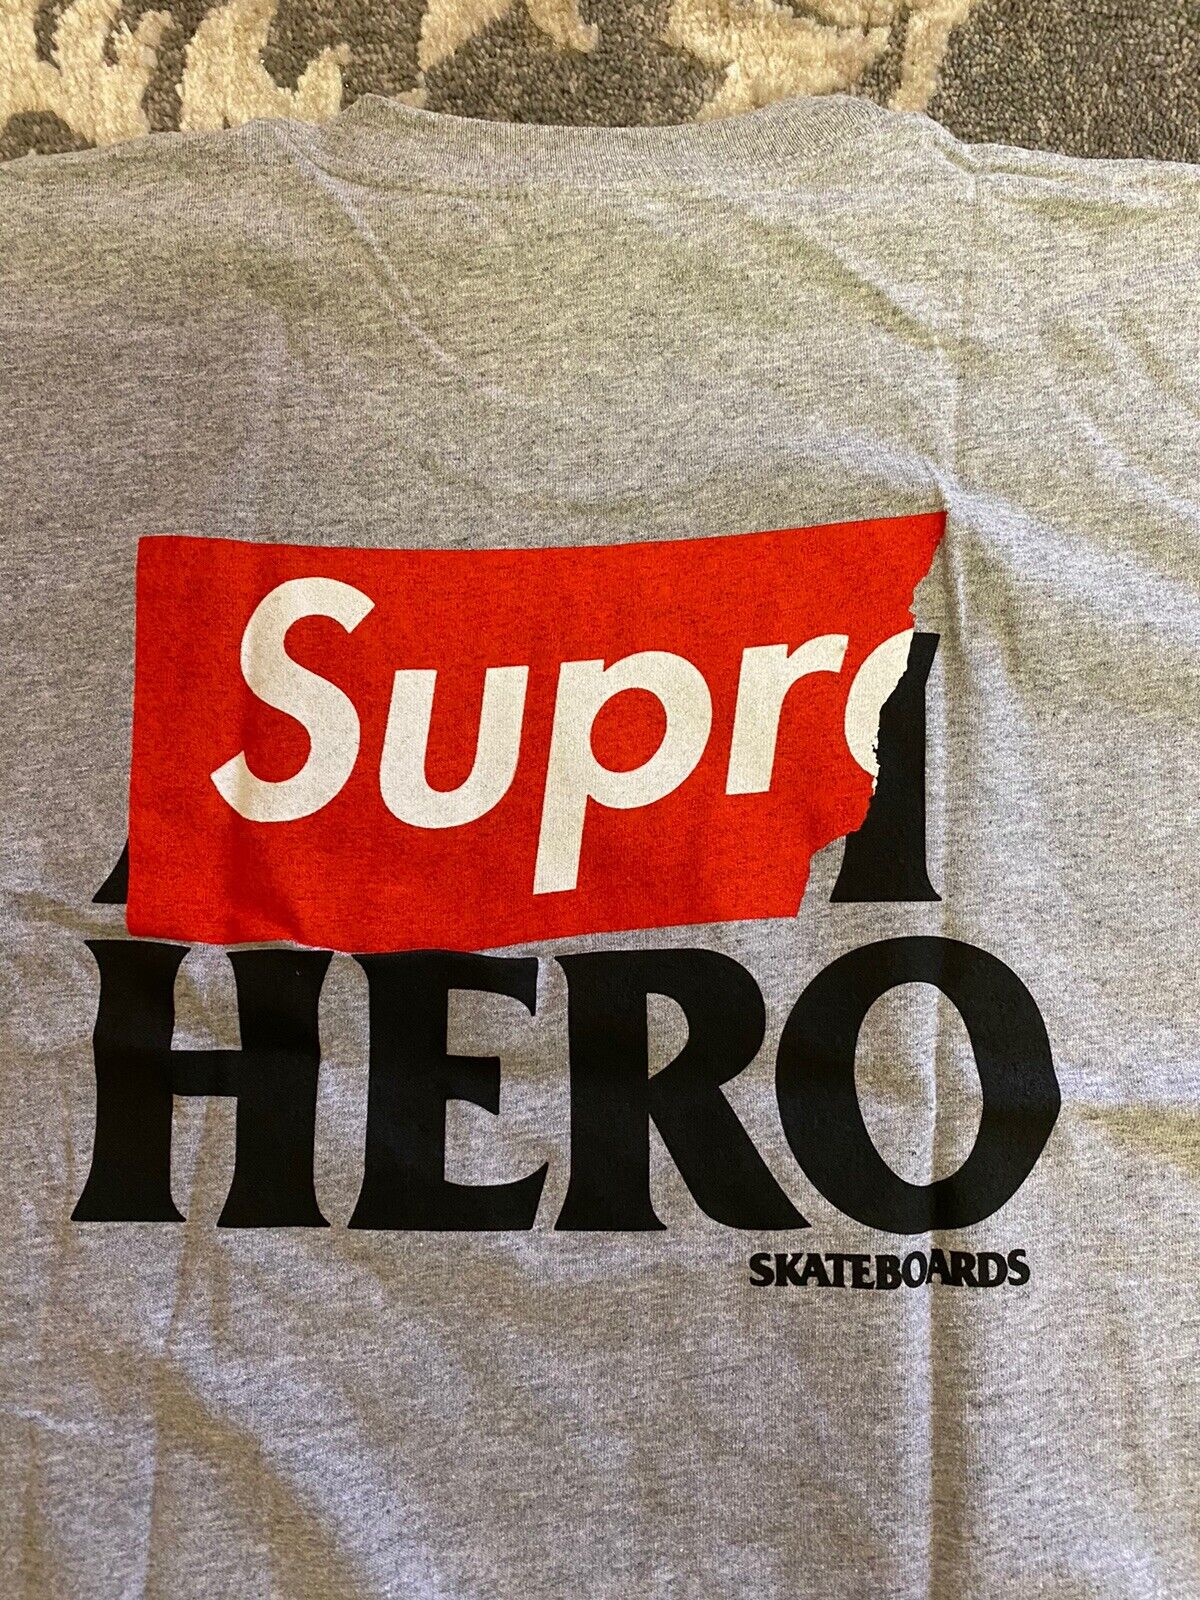 Supreme Anti Hero Pocket Tee T Shirt Grey Mens Sz Large S/S 2014 NEW!!!